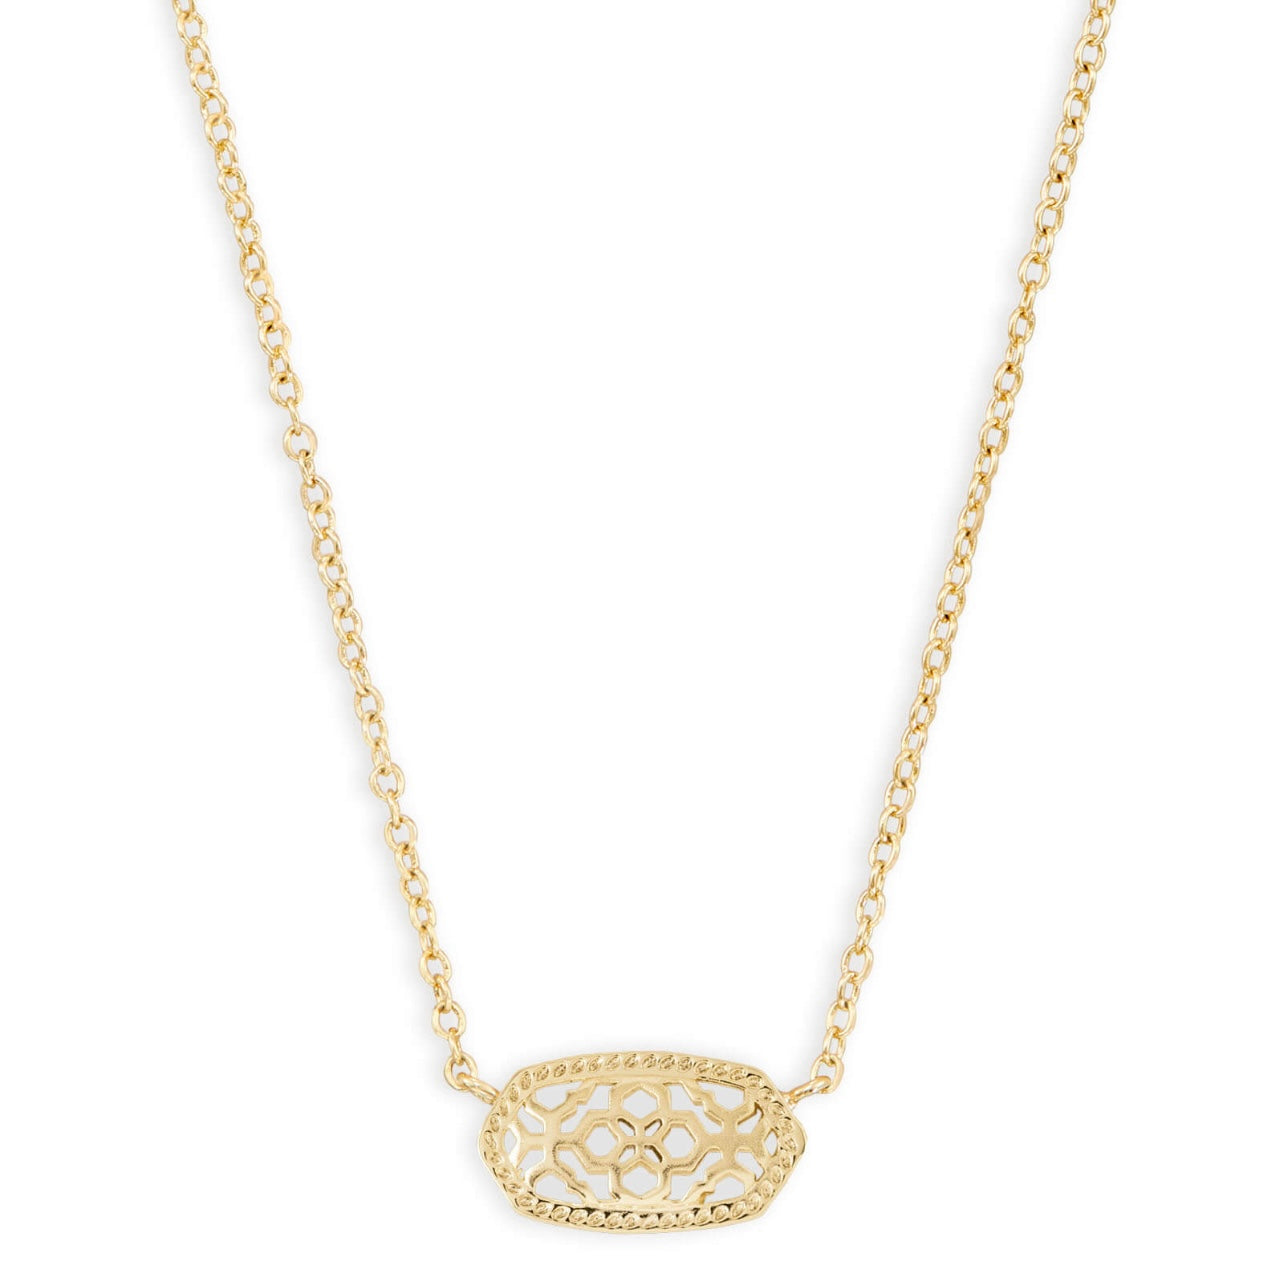 Kendra Scott Elisa Gold Pendant Necklace - The Street Boutique 